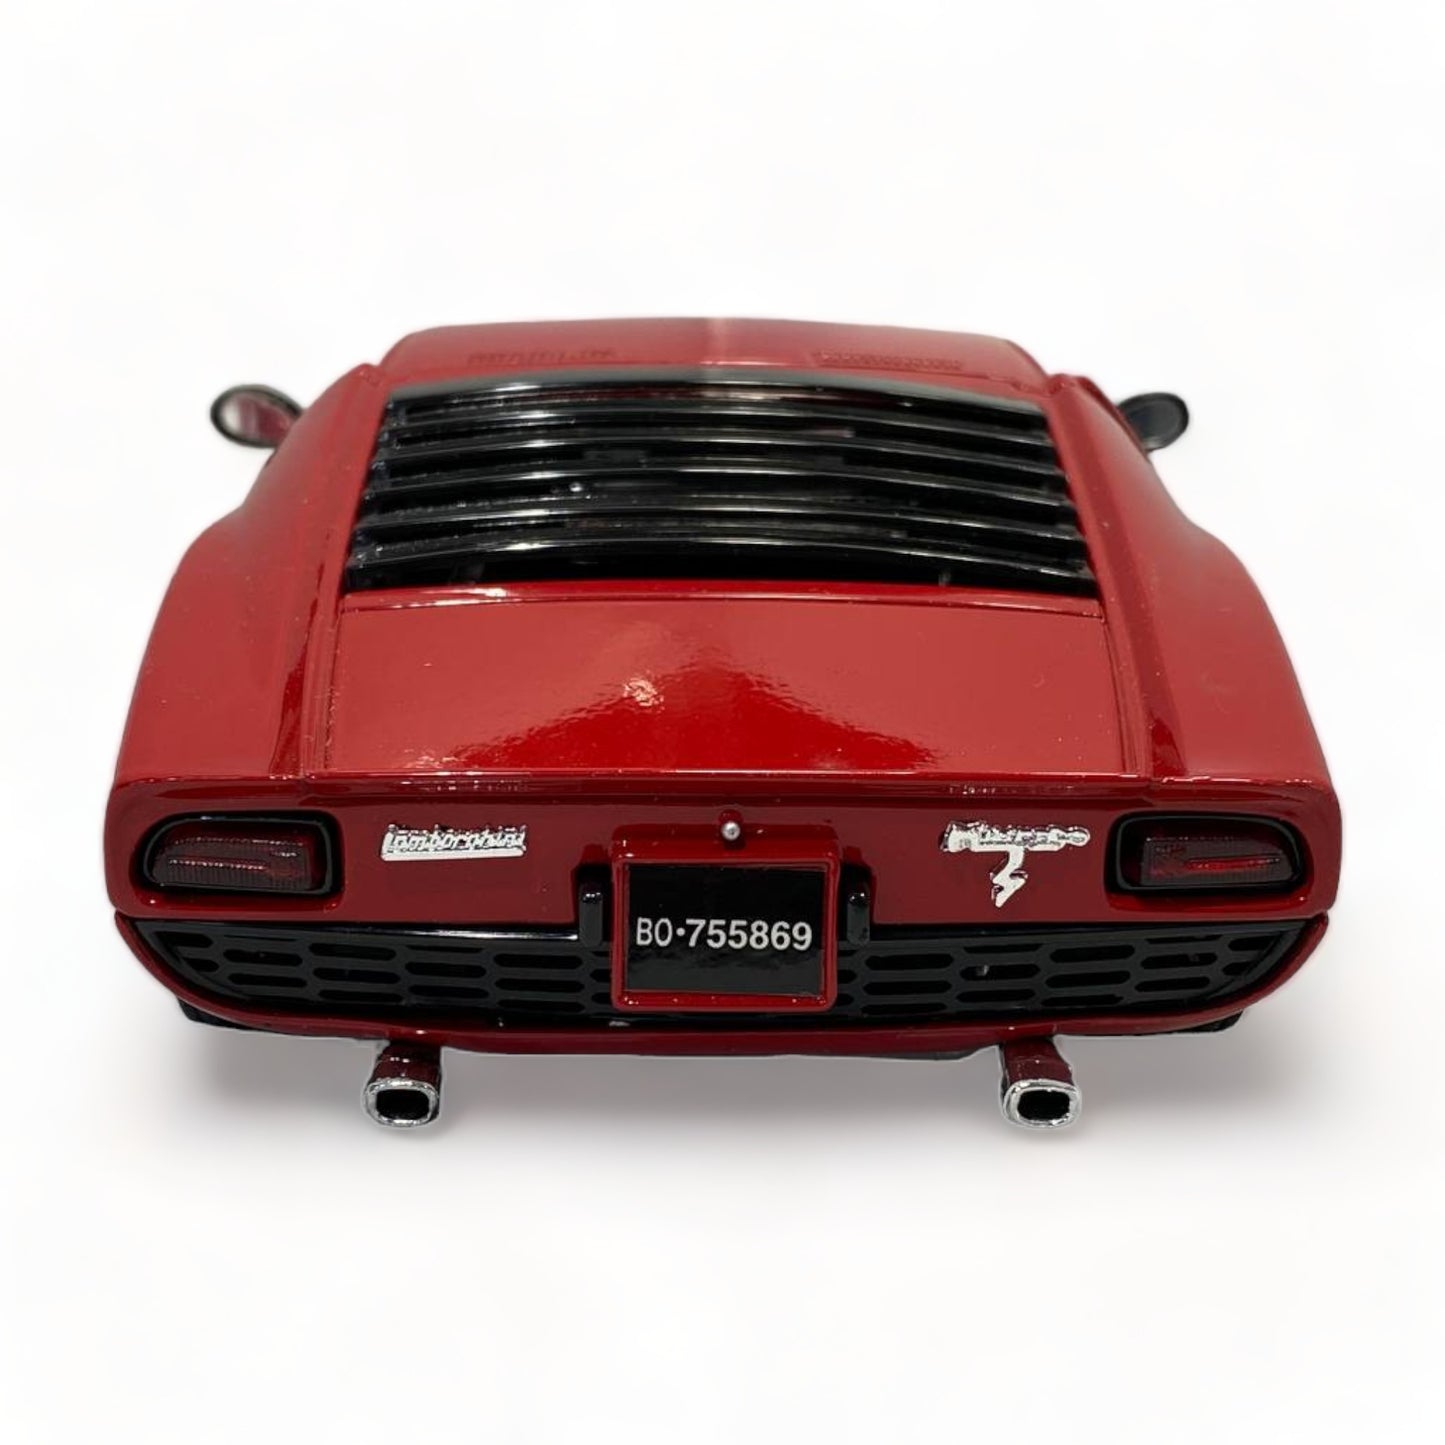 1/18 Diecast Lamborghini MIURA RED 1968 1/18 by Bburago Scale Model Car